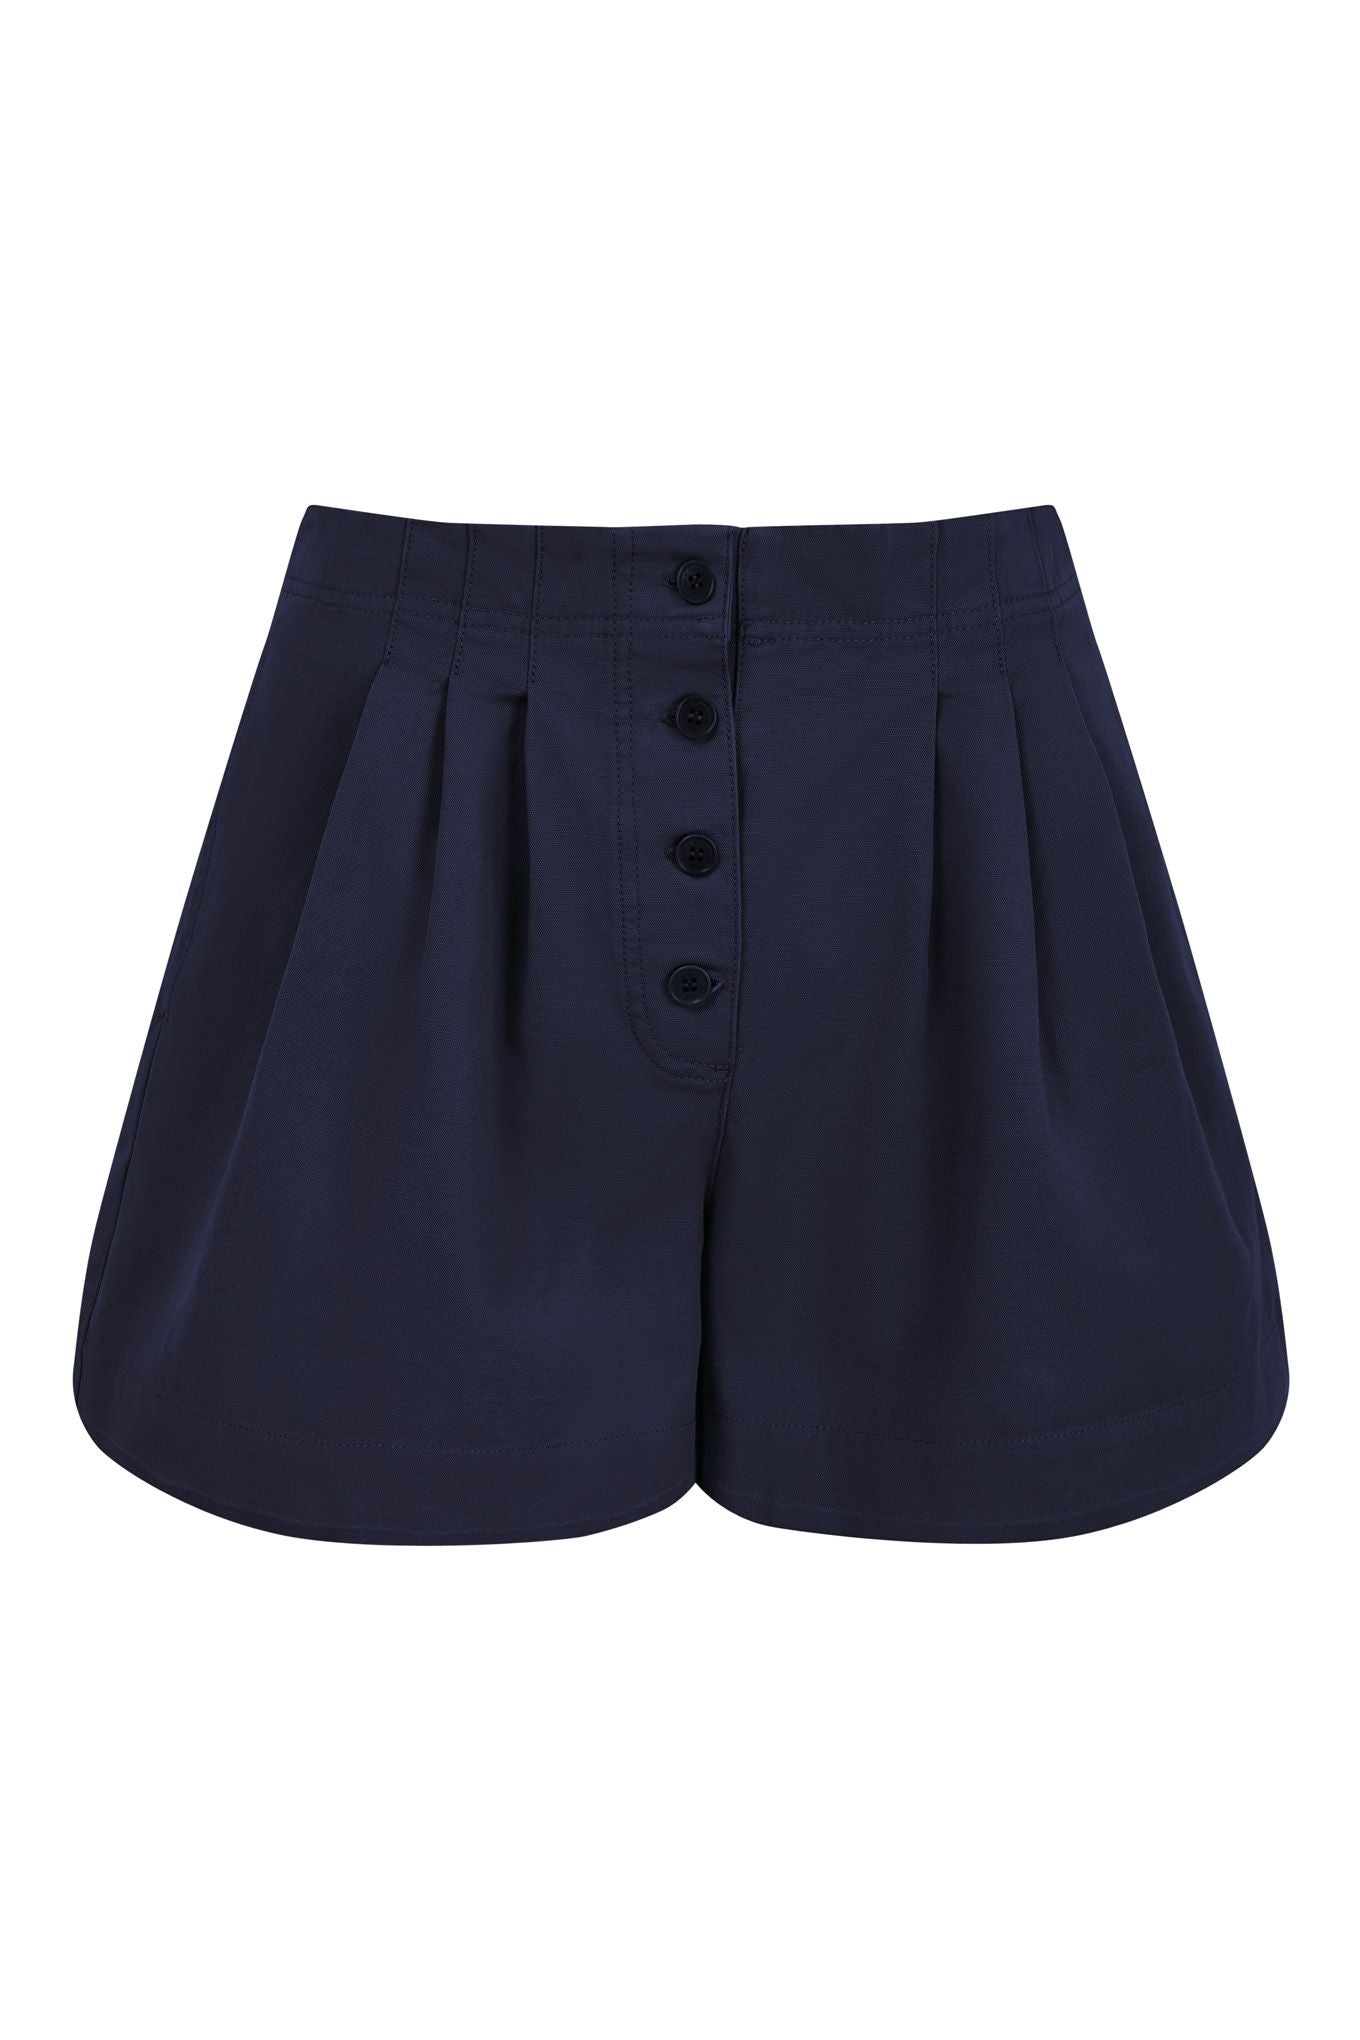 Dark blue LAELA shorts made from 100% organic cotton from Komodo